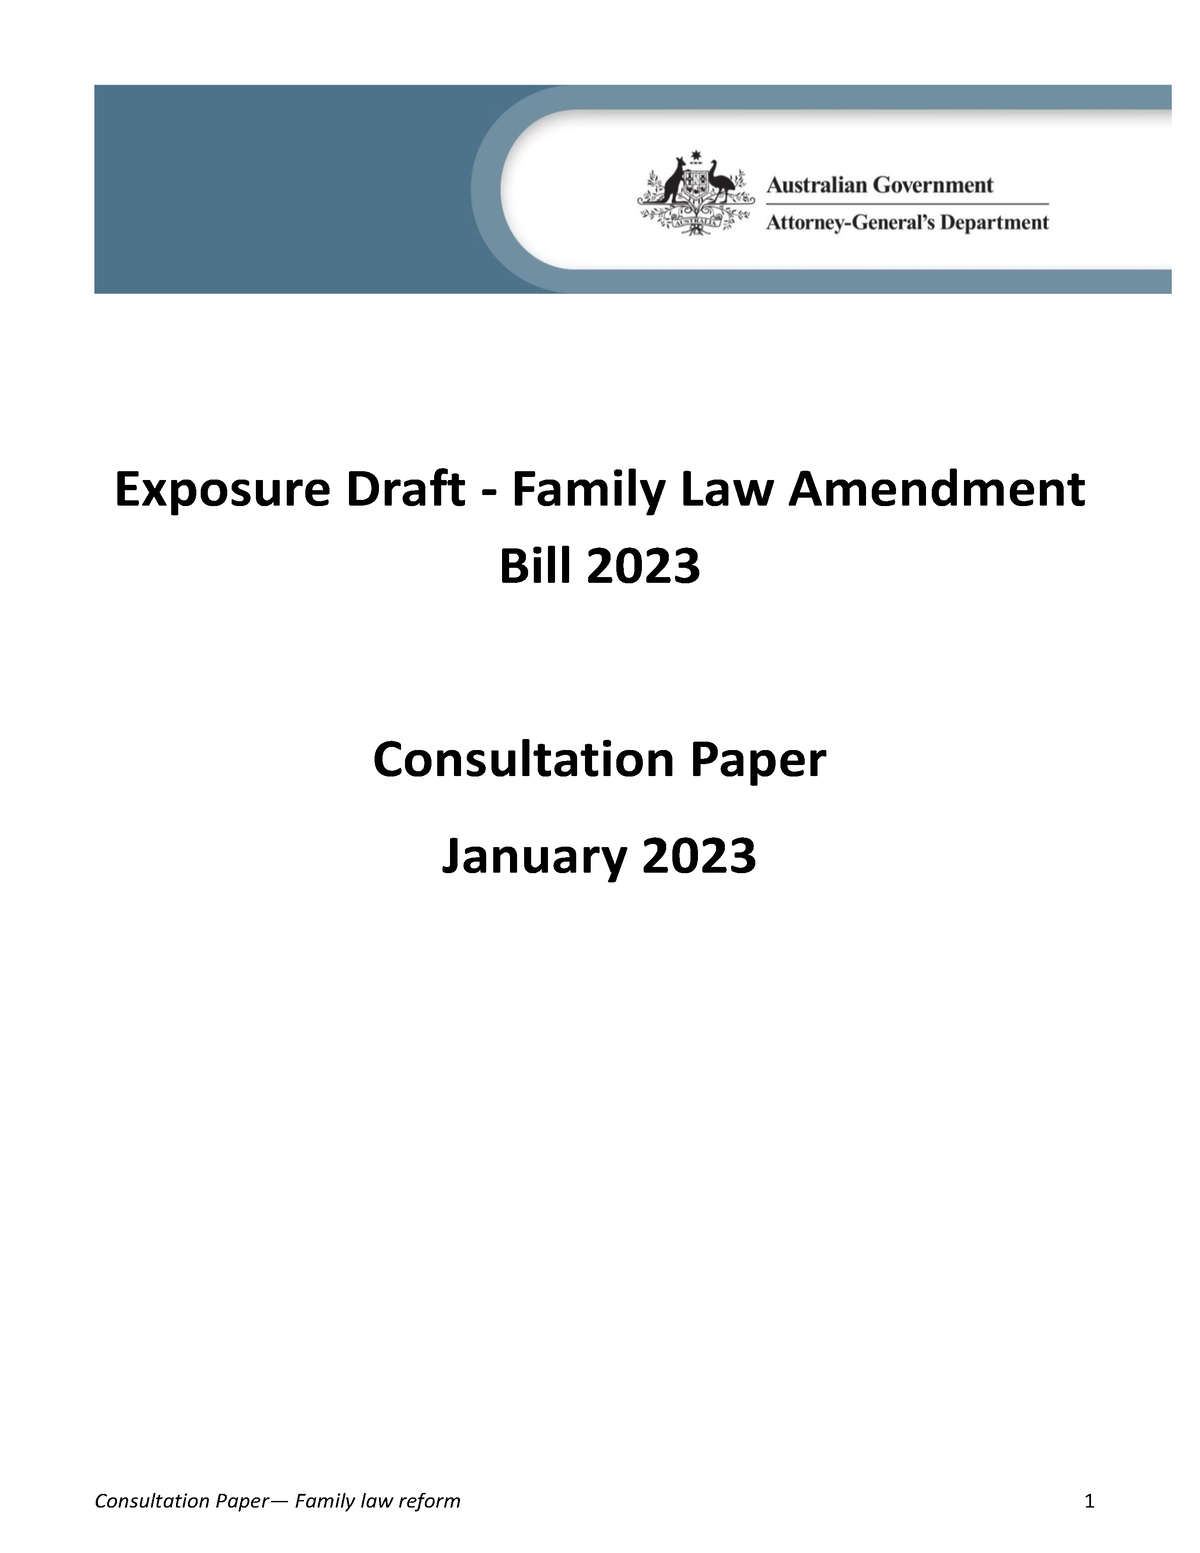 Family Law Amendment Bill 2023 Consultation Paper Exposure Draft